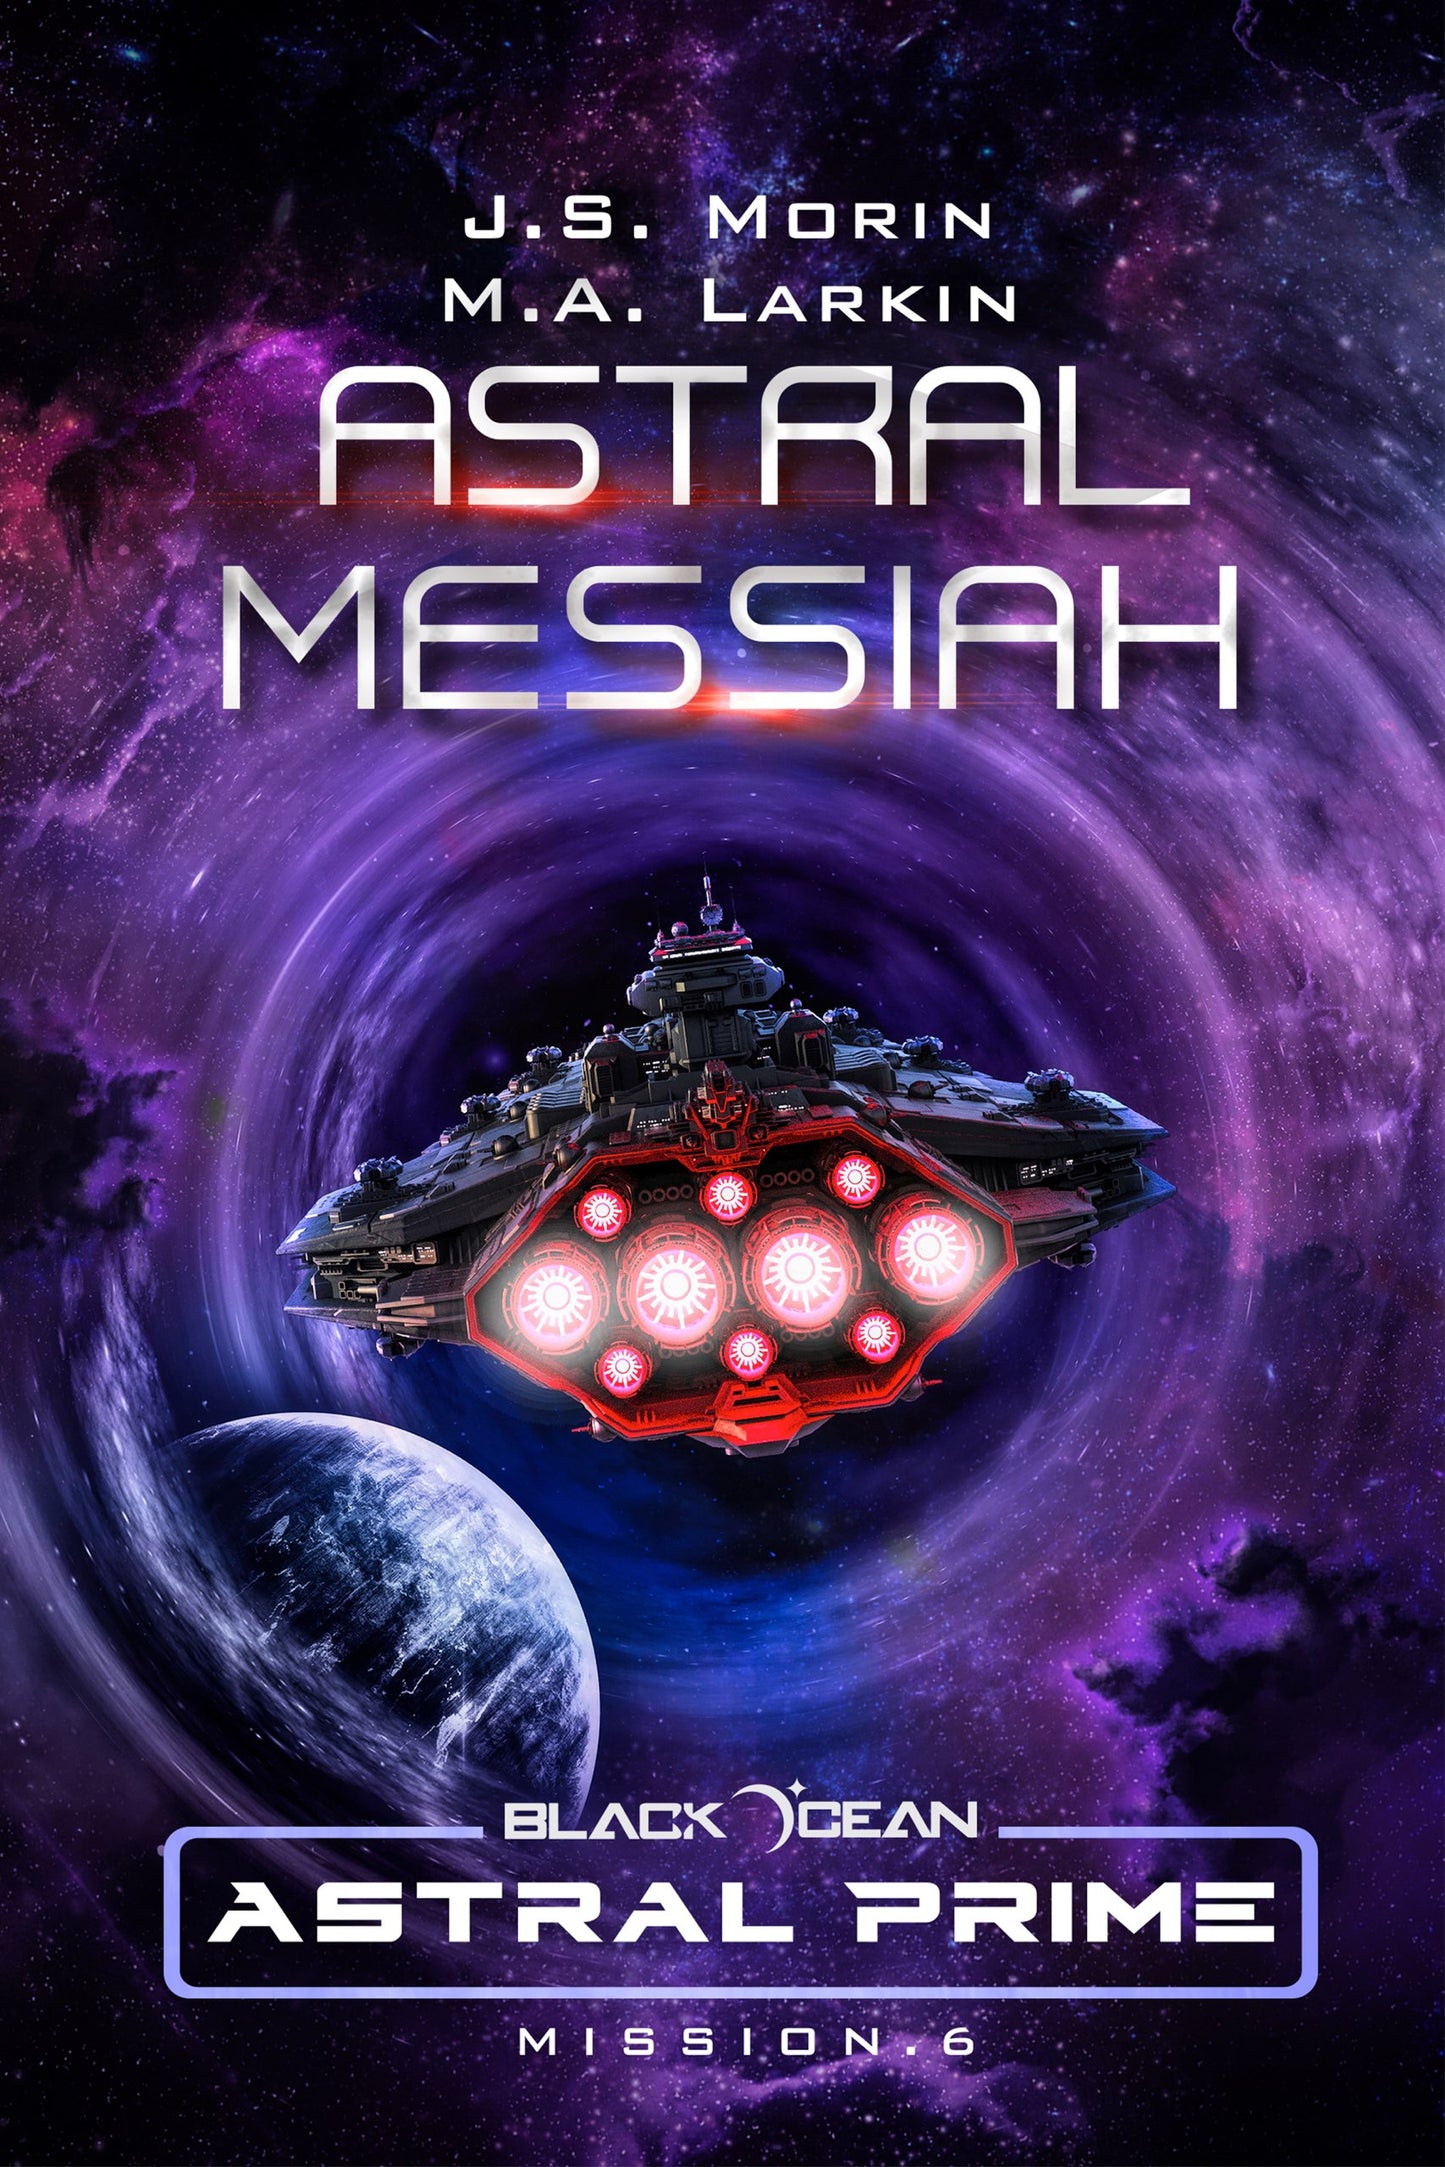 Astral Messiah, Black Ocean: Astral Prime Mission 6